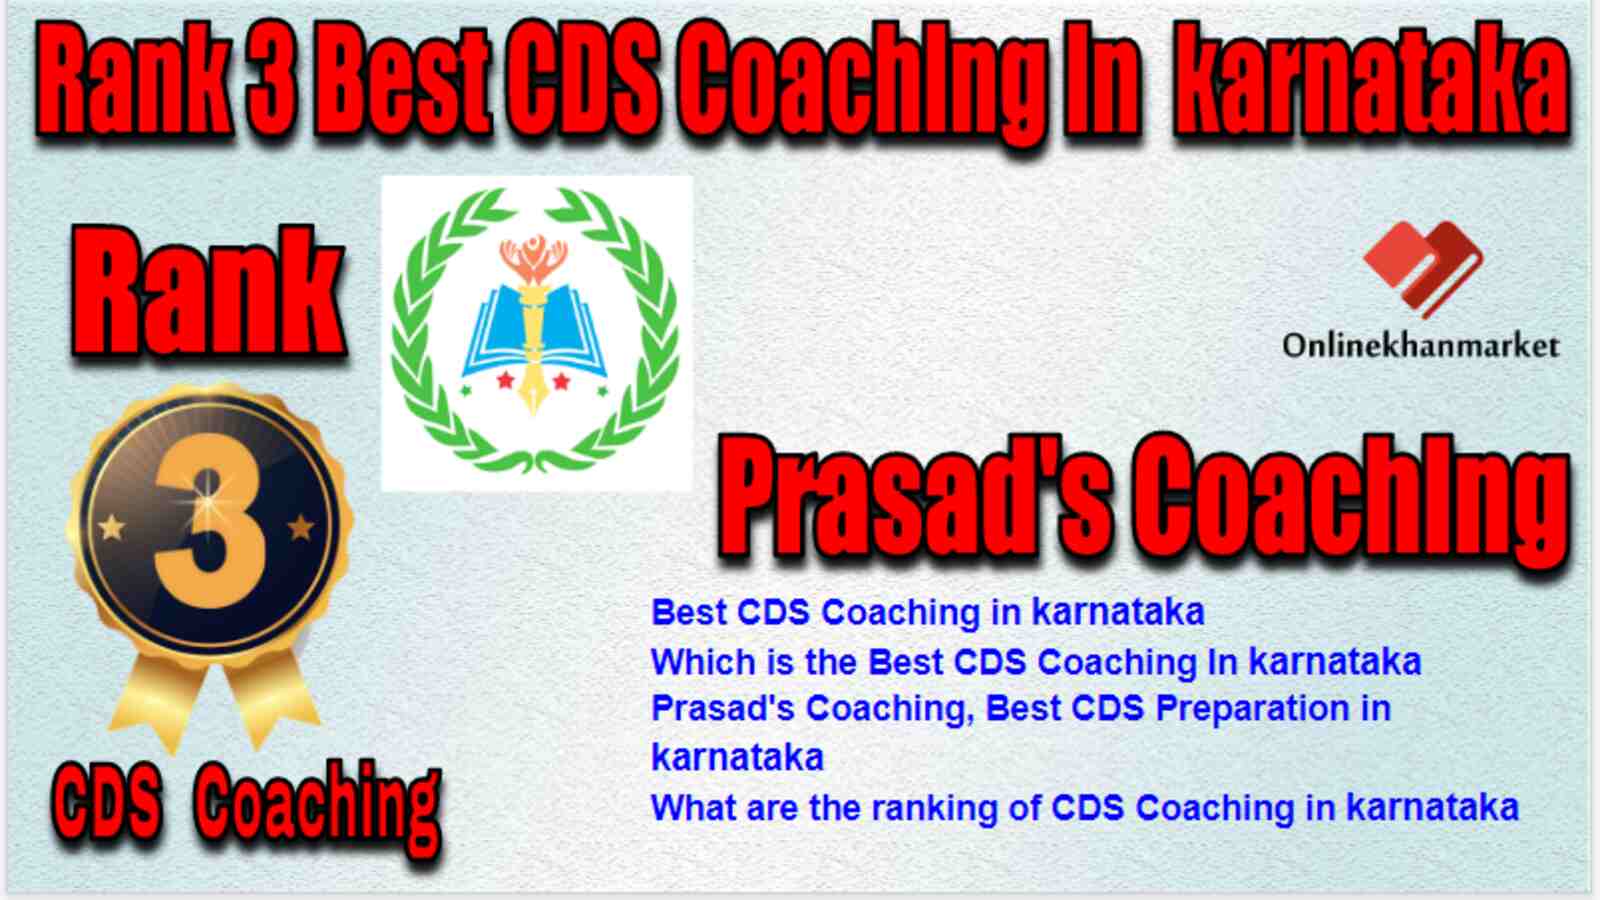 Rank 3 Best CDS Coaching in Karnataka